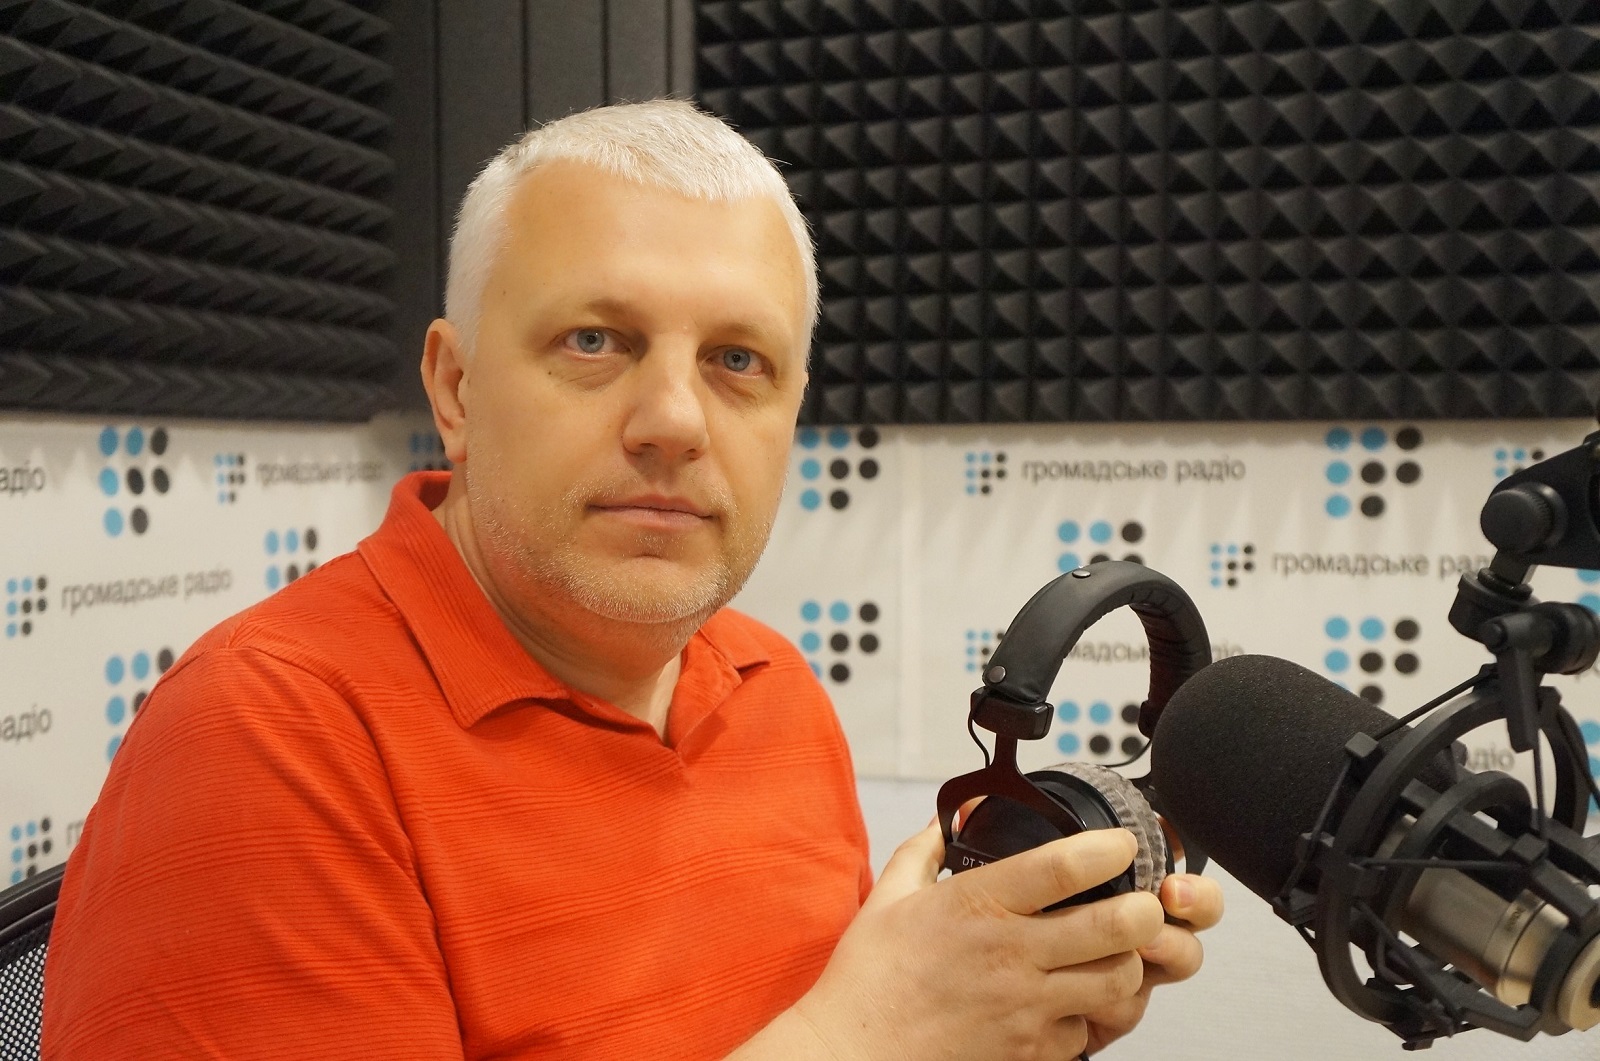 Дело Шеремета: экс-сотрудник спецподразделения КГБ Беларуси Макар дал показания в Киеве